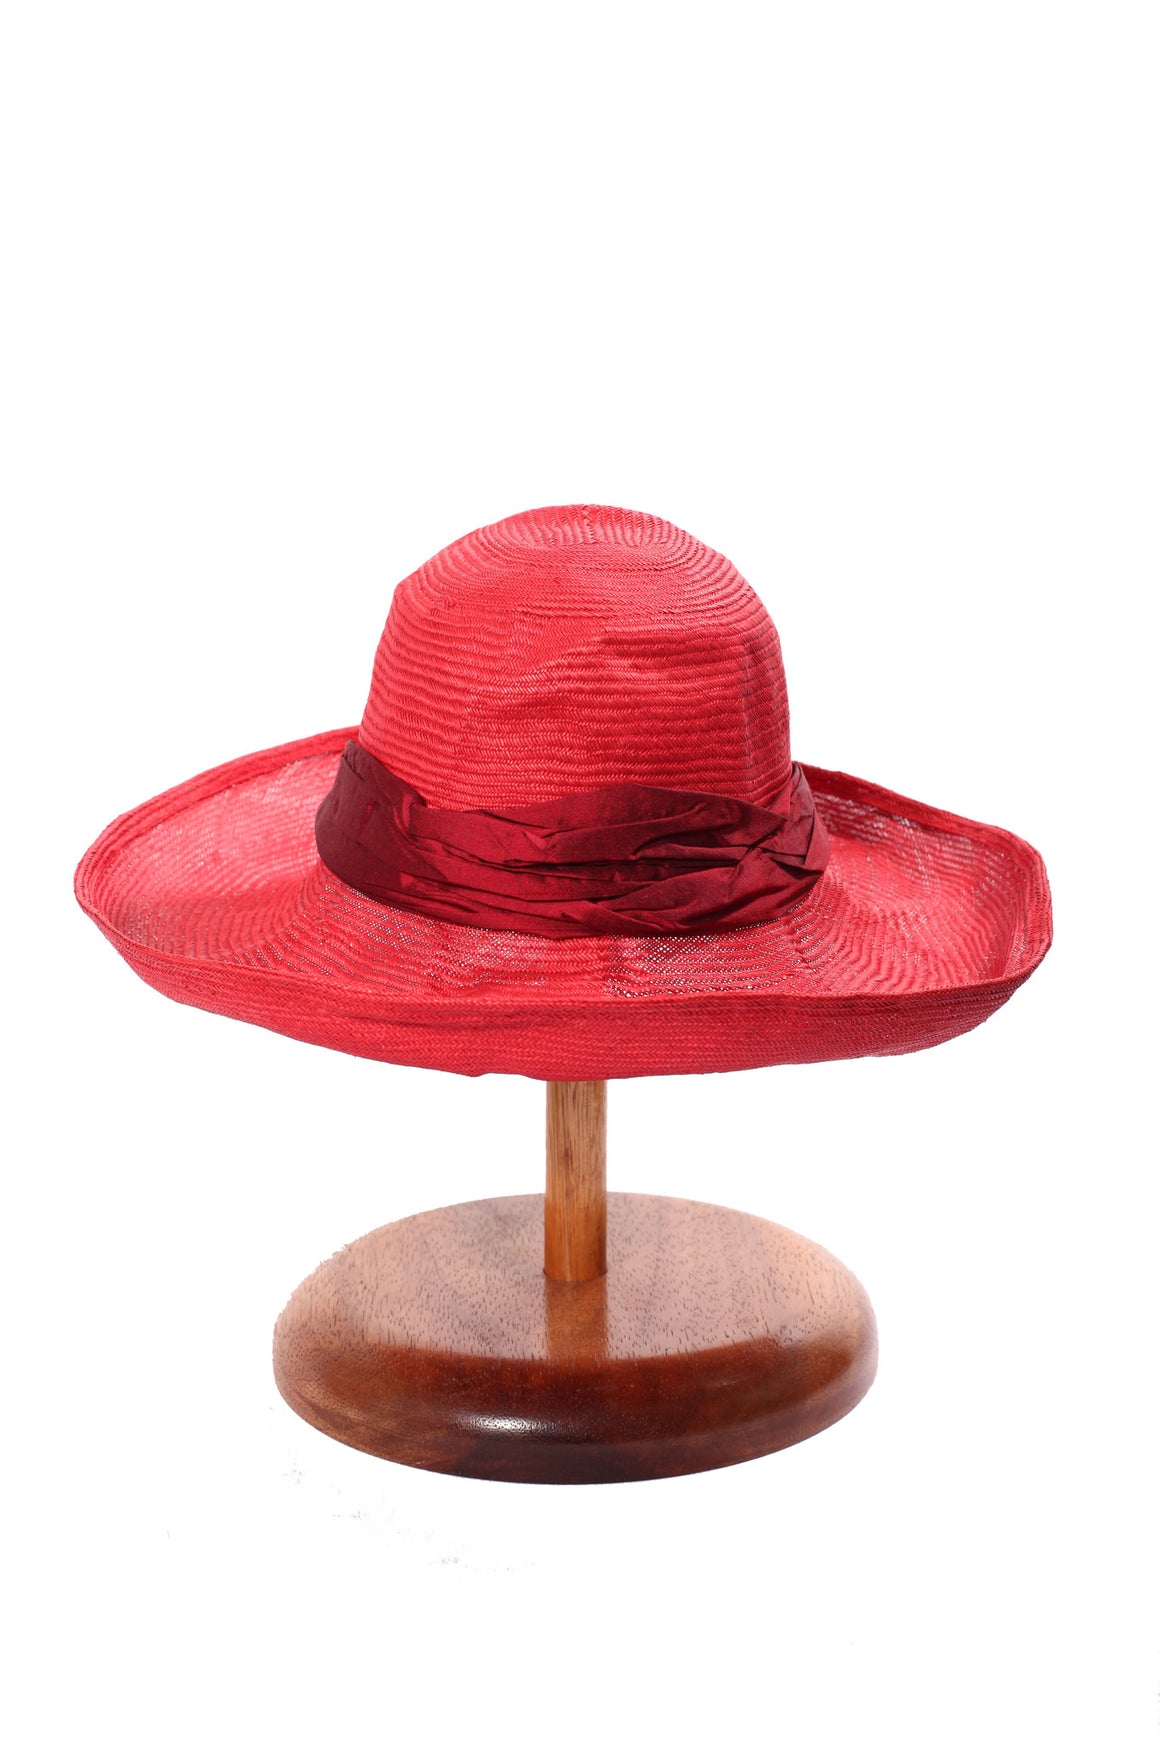 Maya Neumann Squash Hat - Red